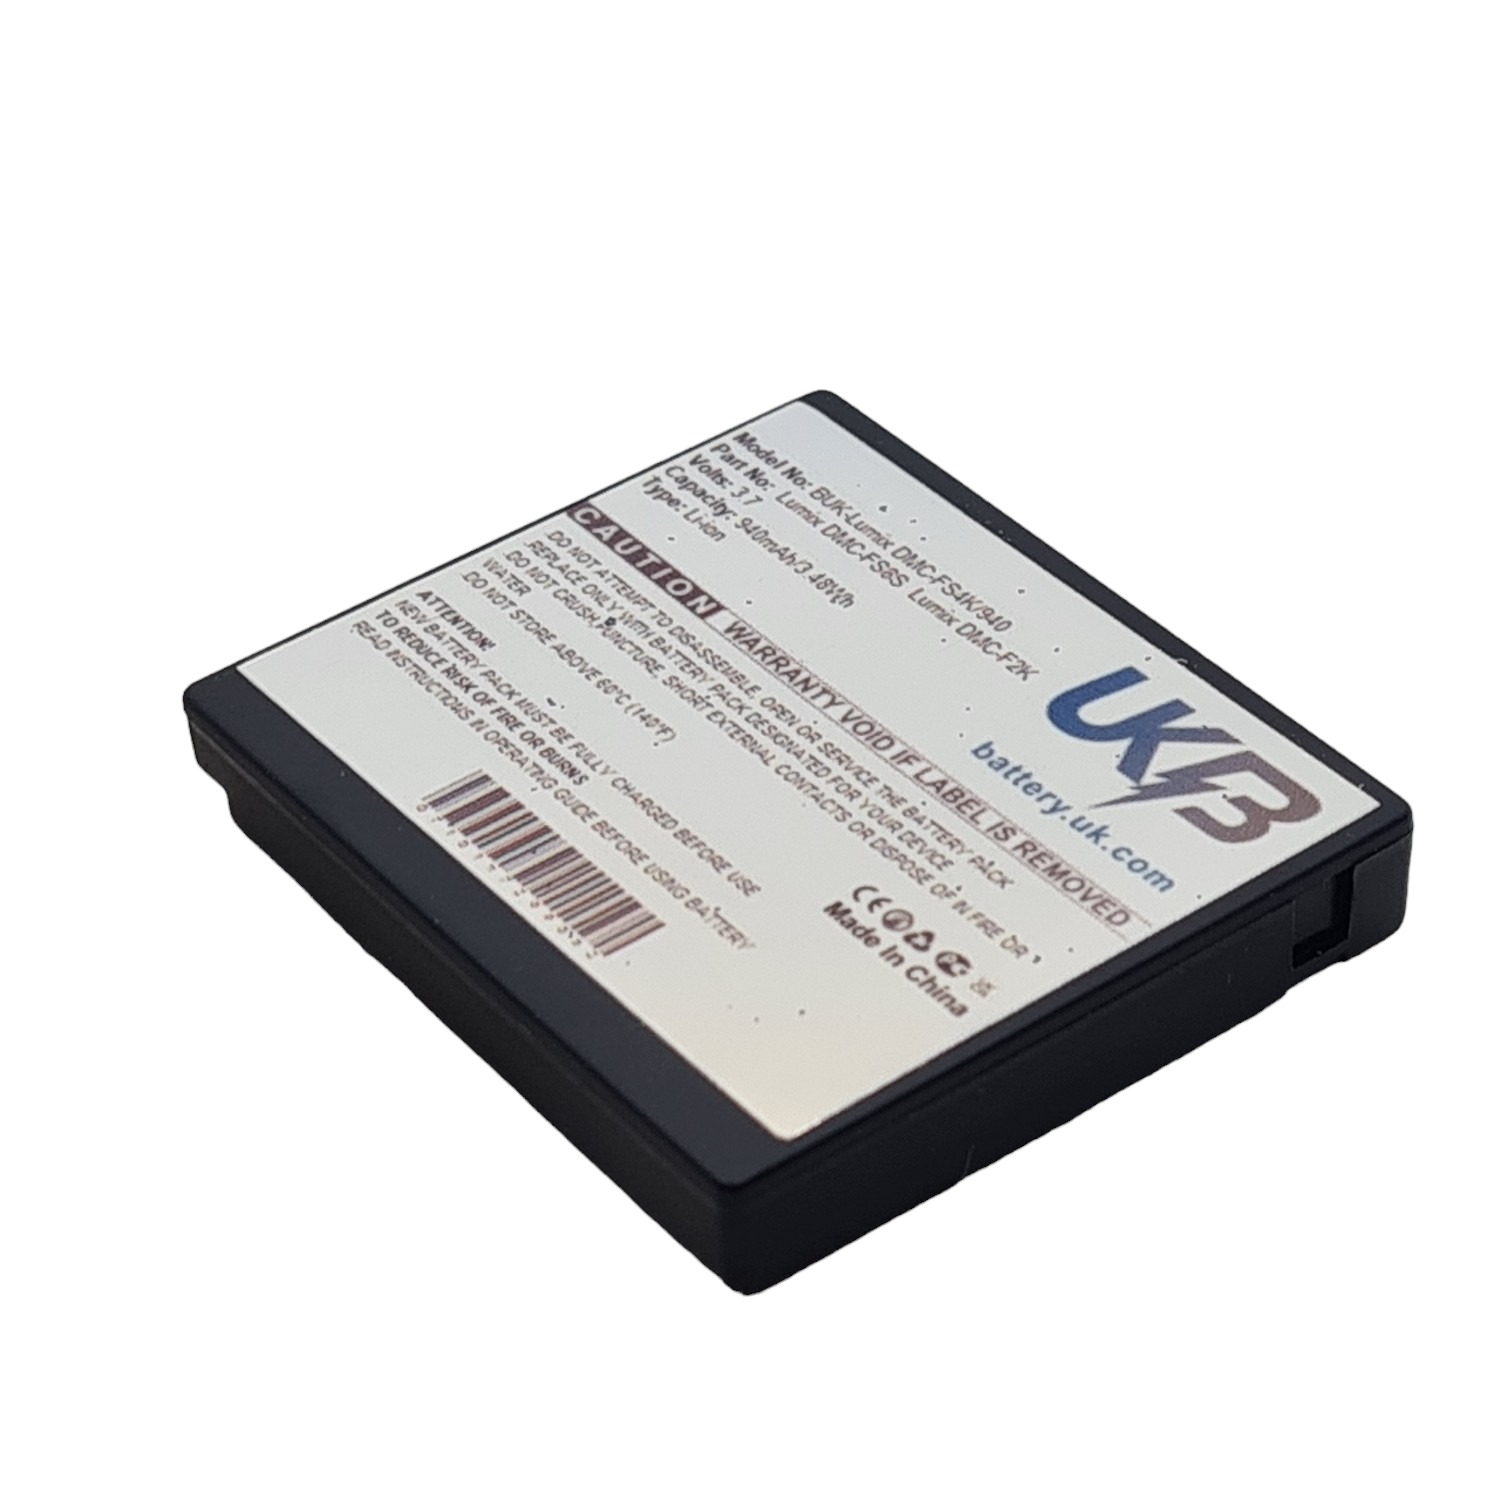 PANASONIC Lumix DMC FS7EG P Compatible Replacement Battery